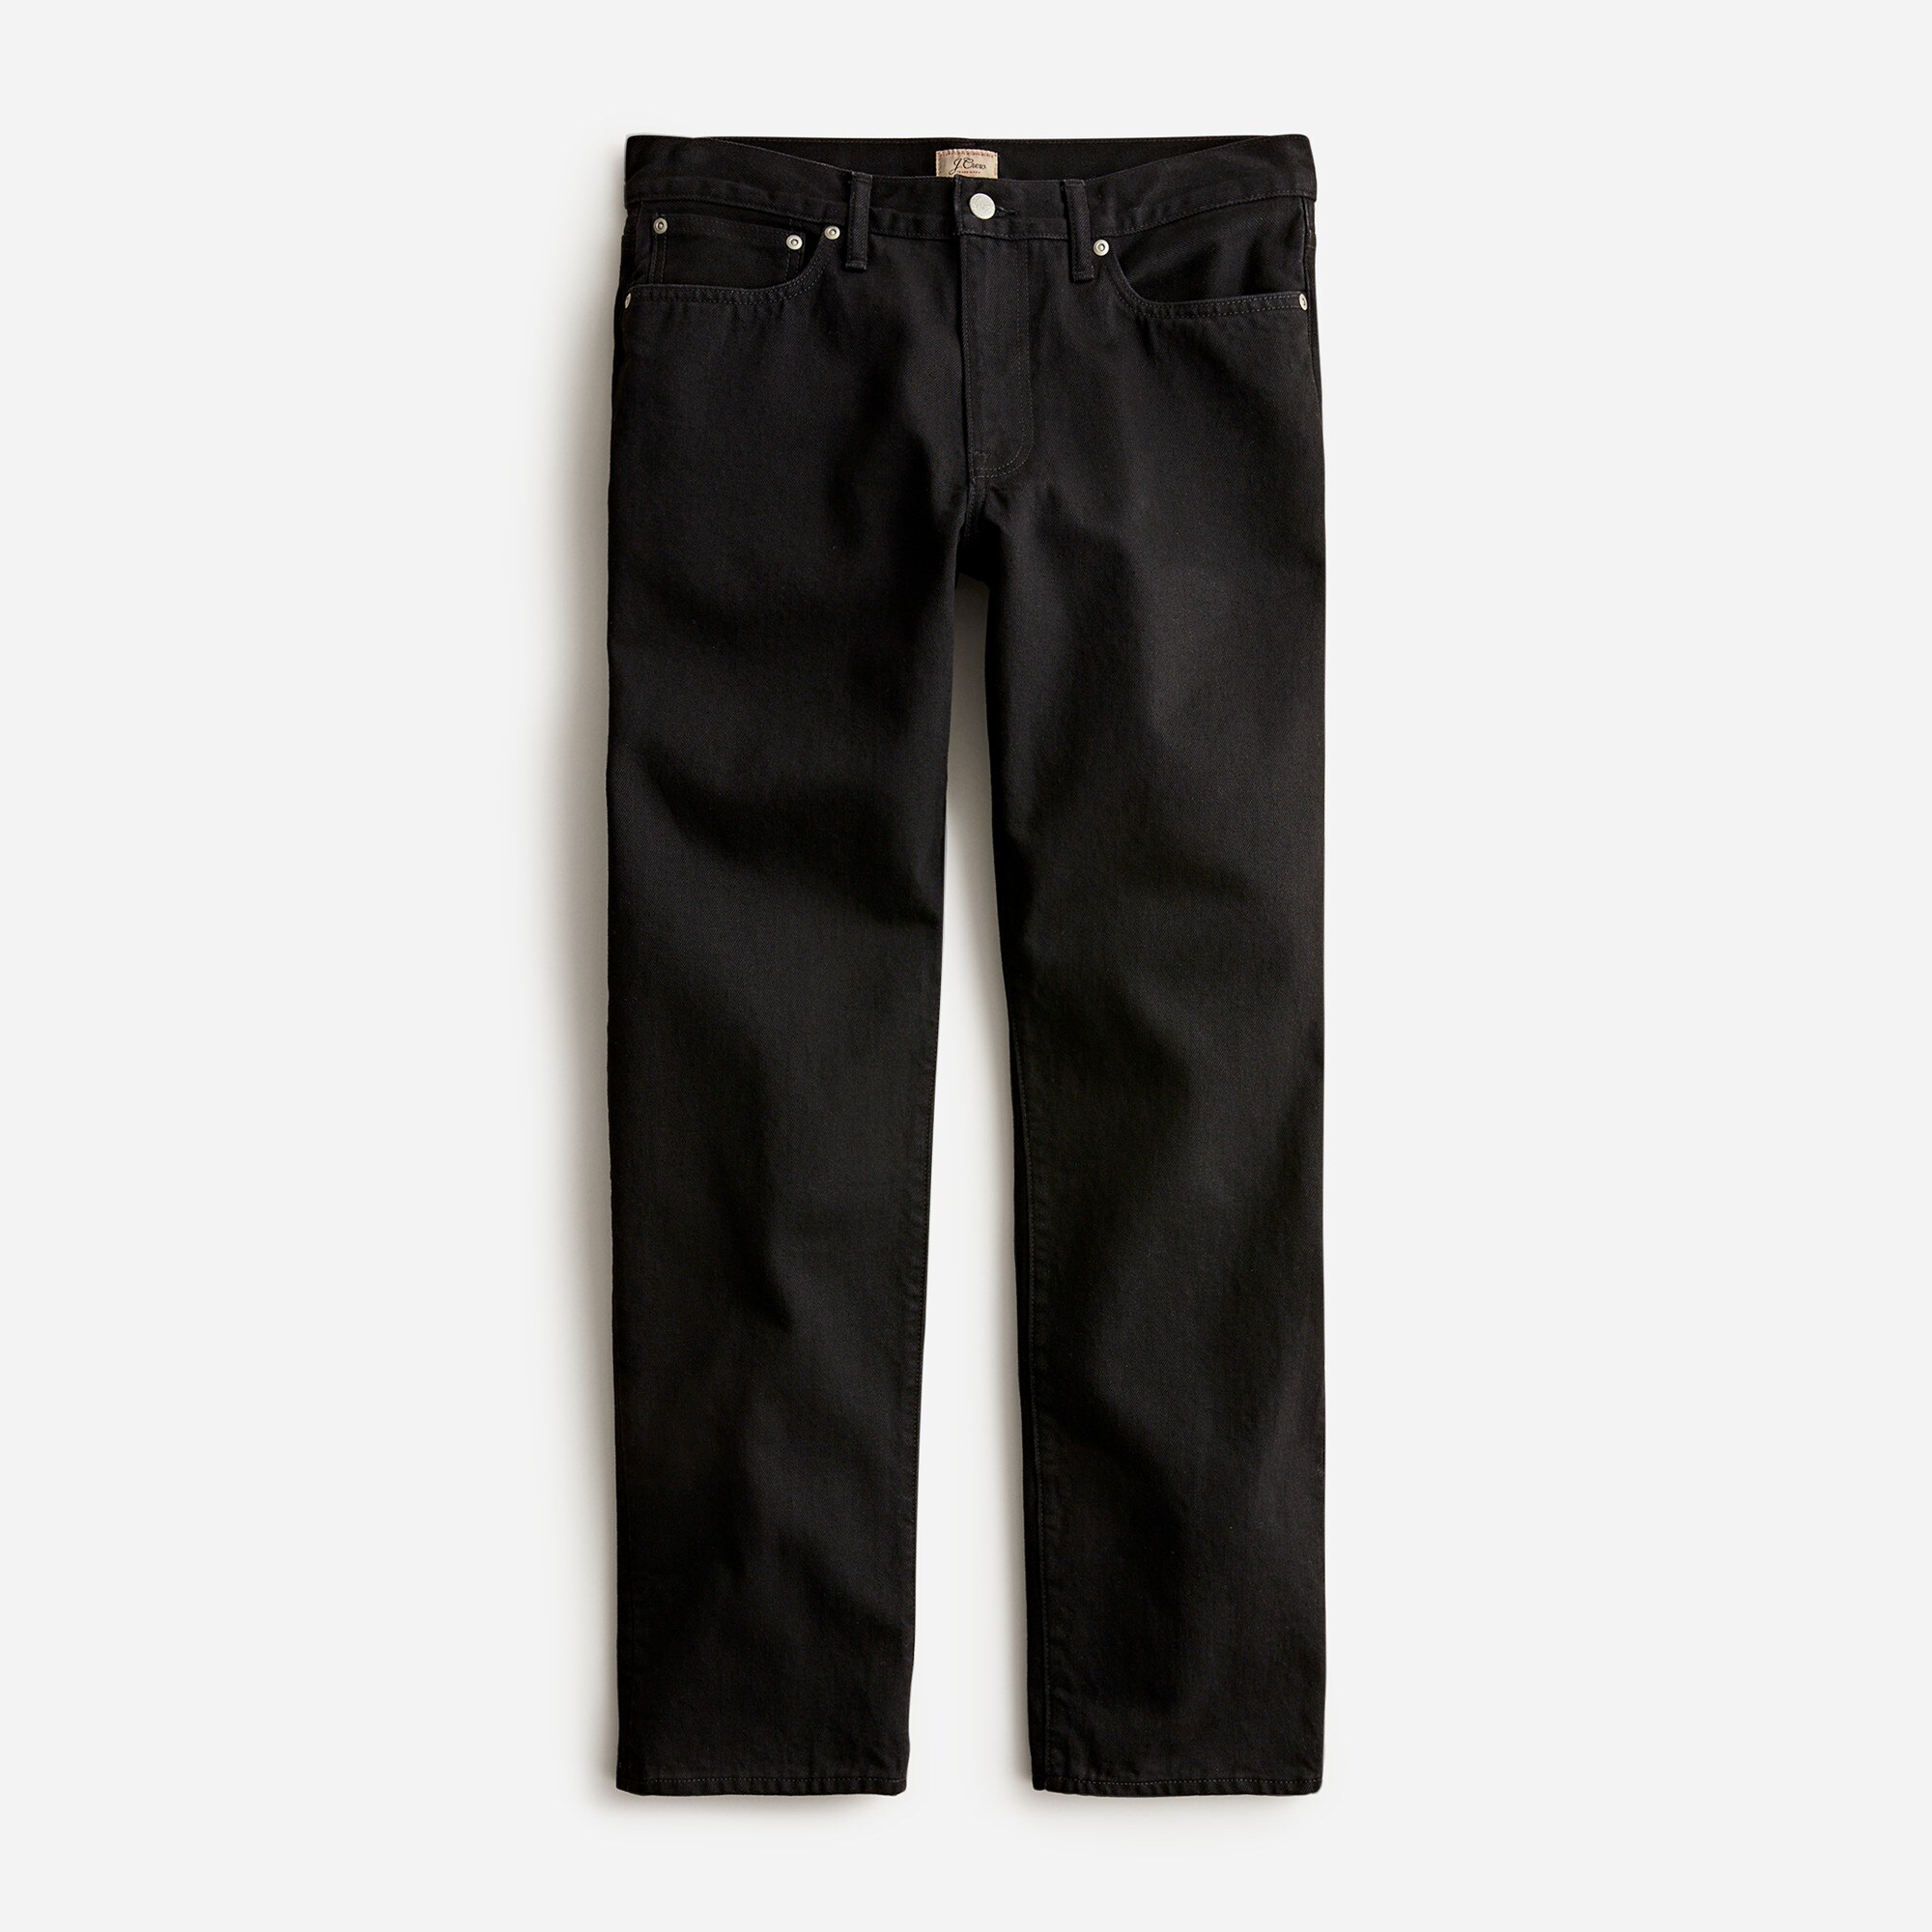 mens Classic jean in black wash